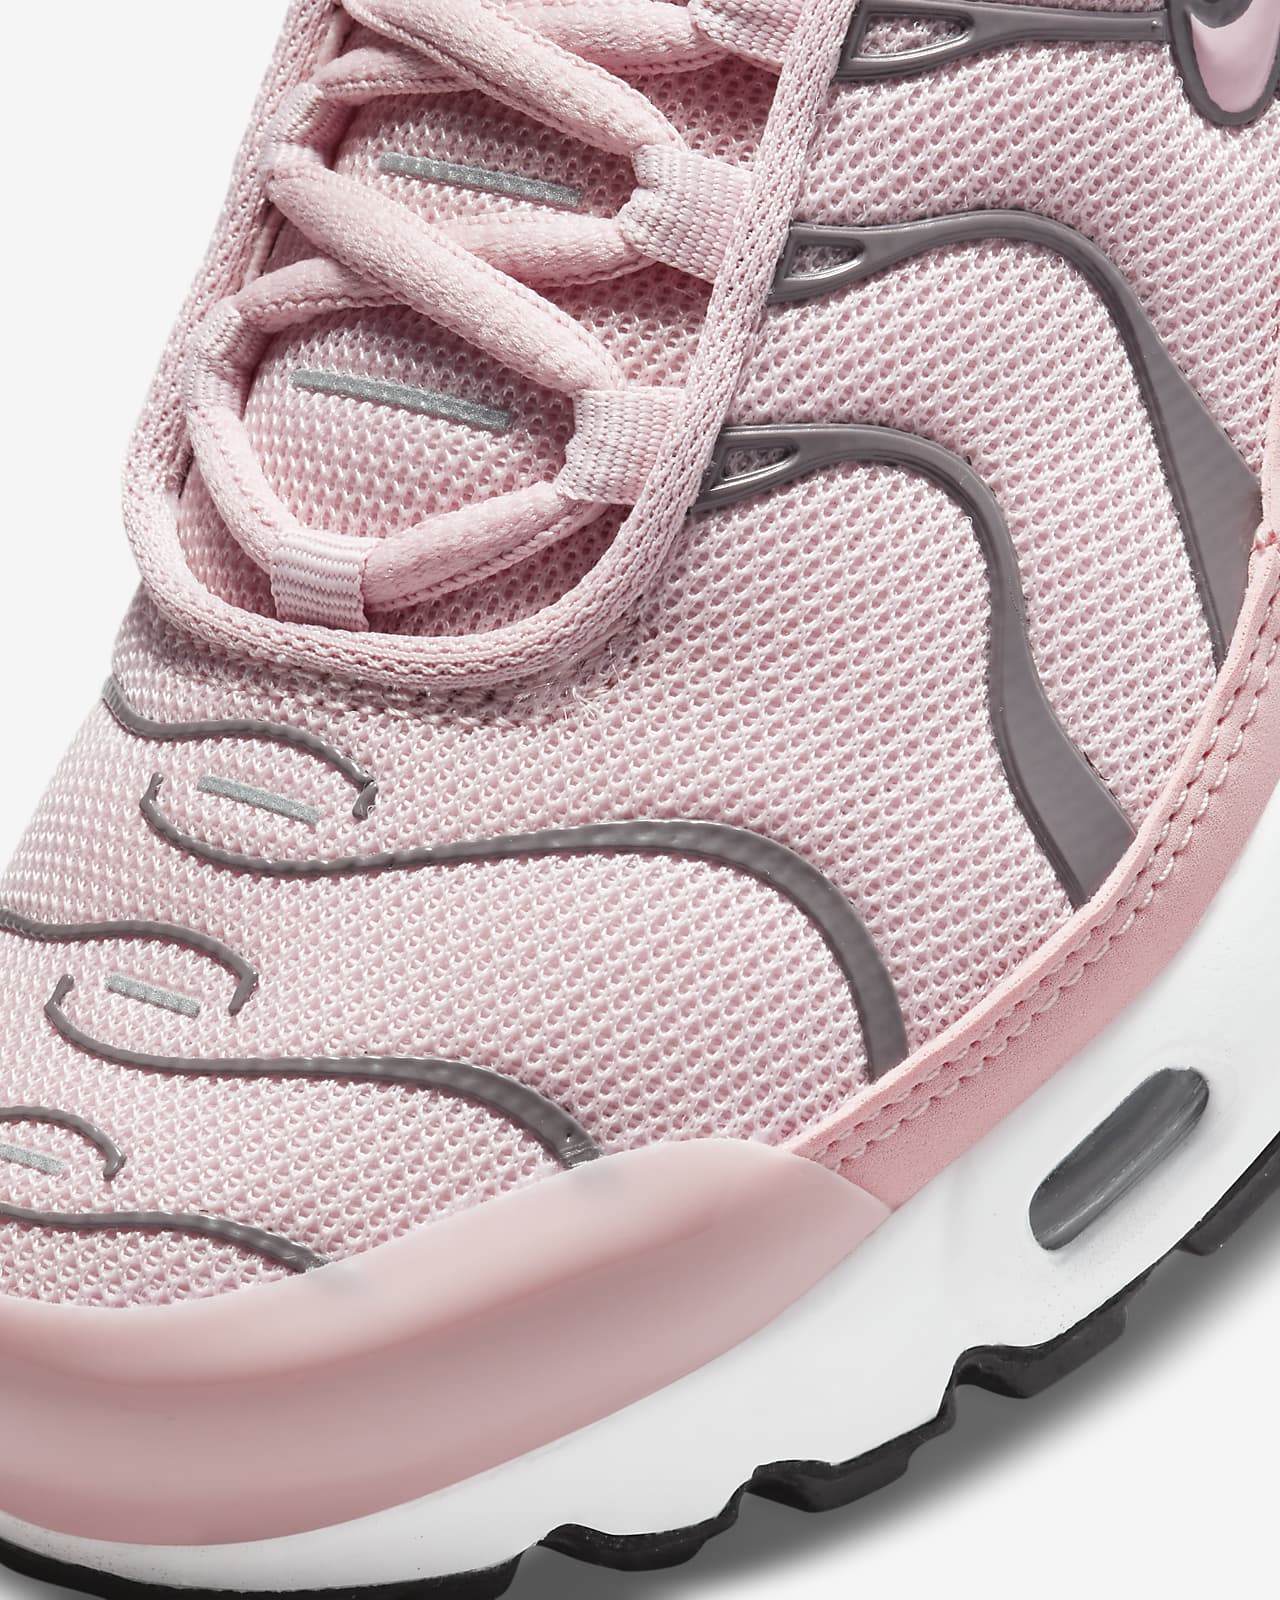 træfning støbt Aske Nike Air Max Plus-sko til større børn. Nike DK